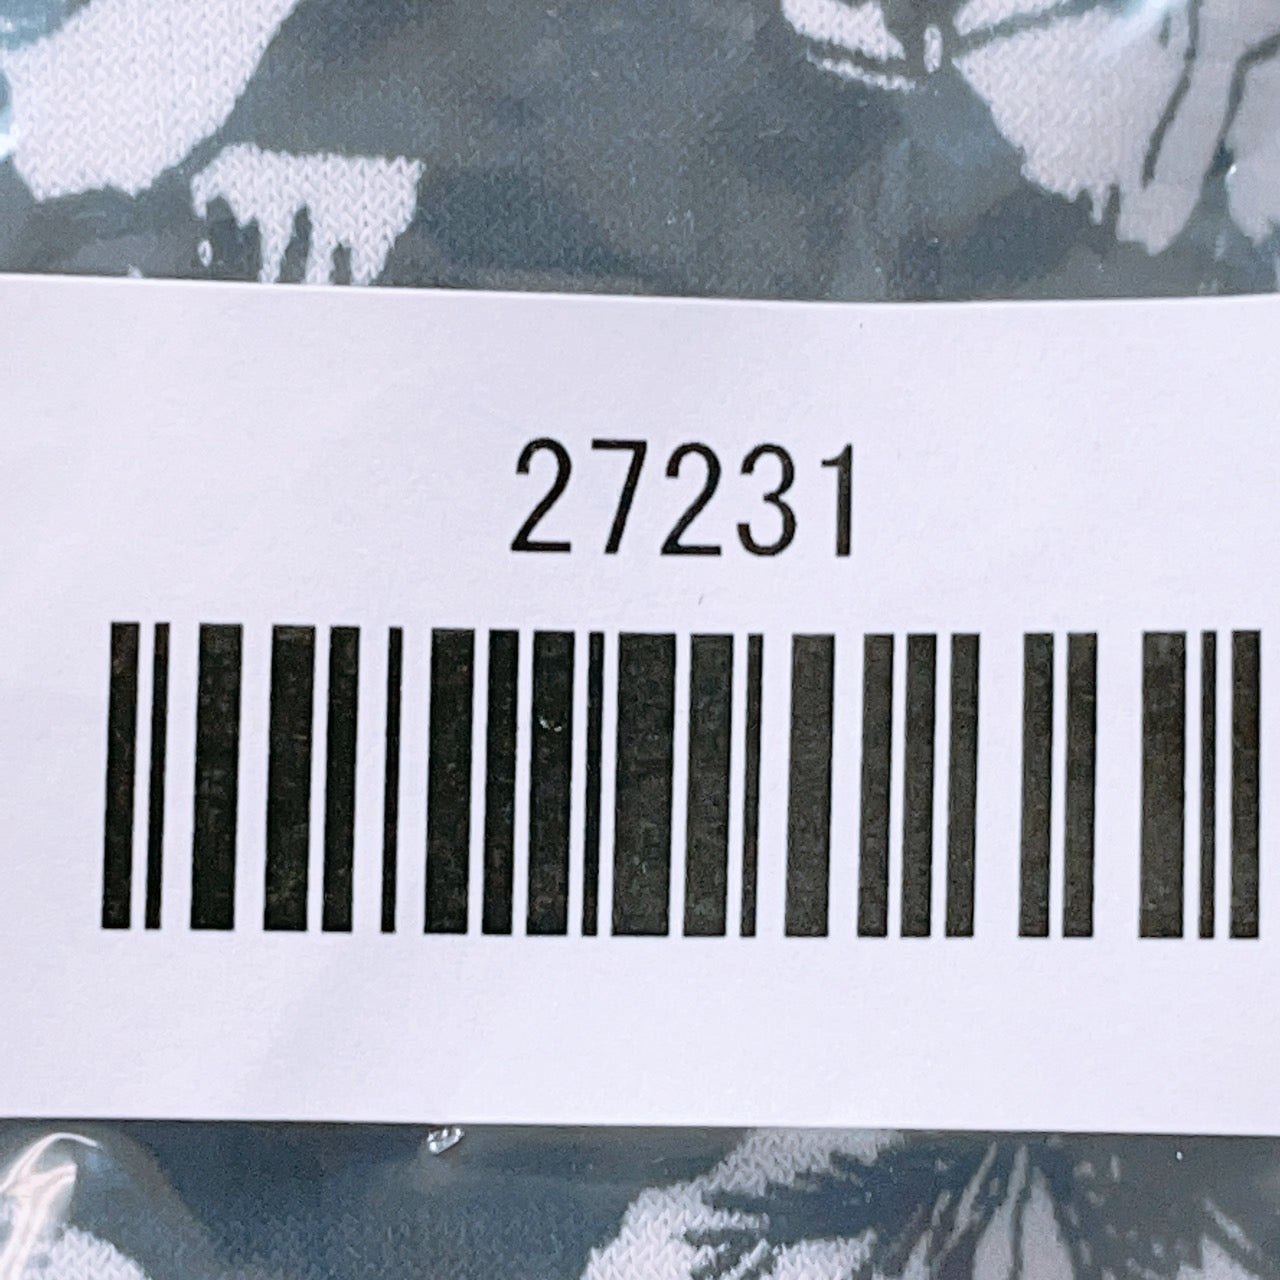 【27231】 PLST プラステ ノースリーブシャツ サイズM ブラック タンクトップ カジュアルシャツ インナーシャツ 総柄 花柄 レディース